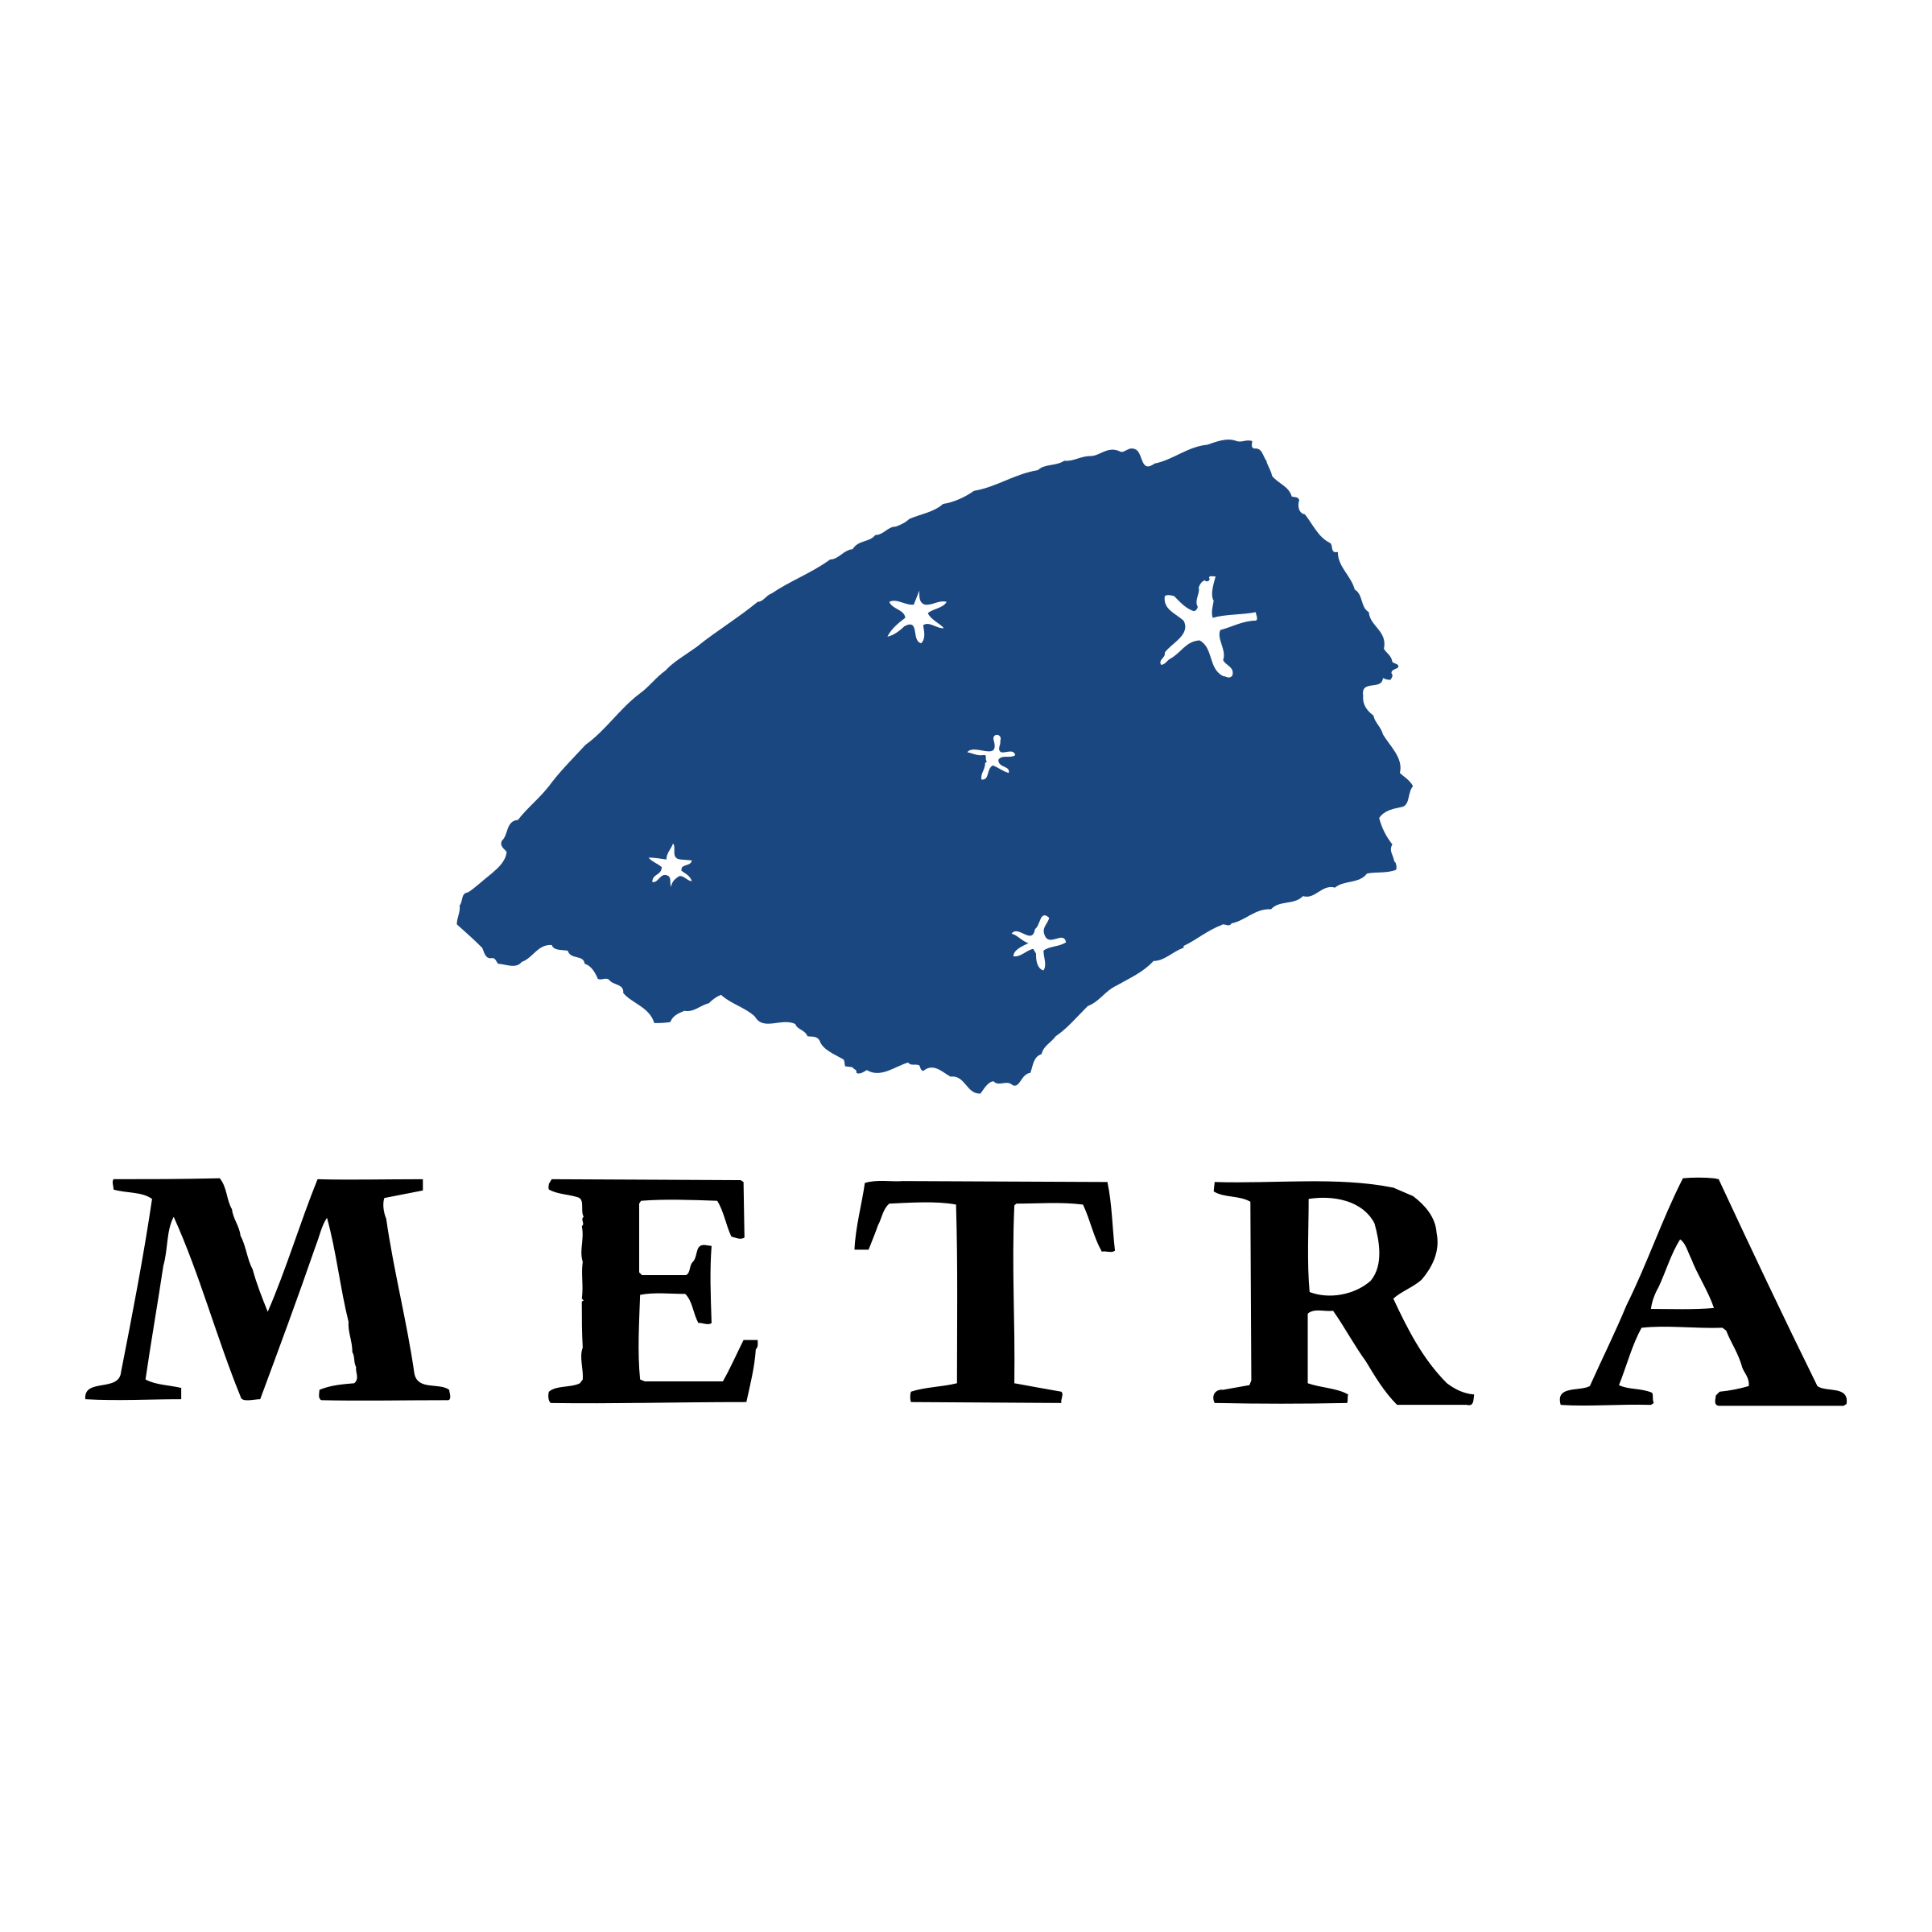 Metra Logo - Metra Logo PNG Transparent & SVG Vector - Freebie Supply